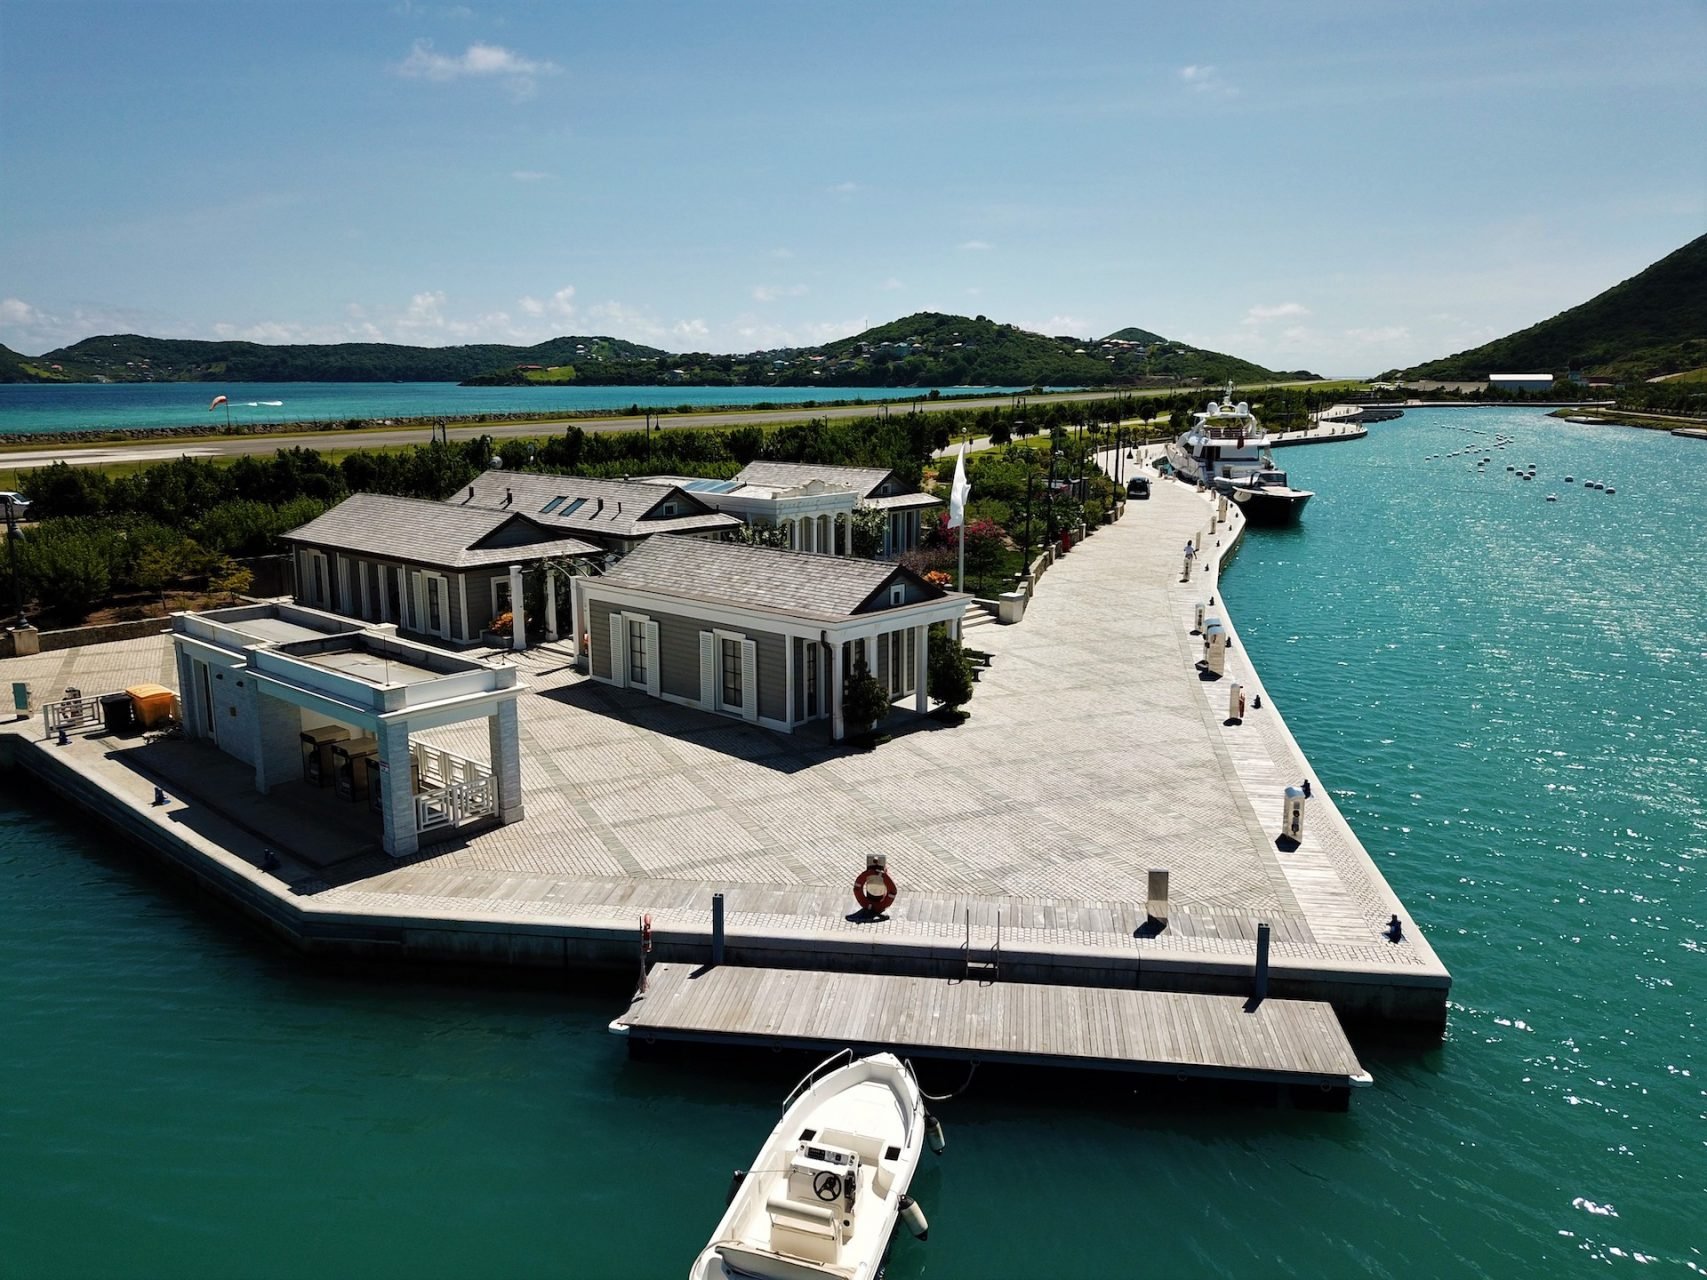 Marina office and berths sandy lane yacht club